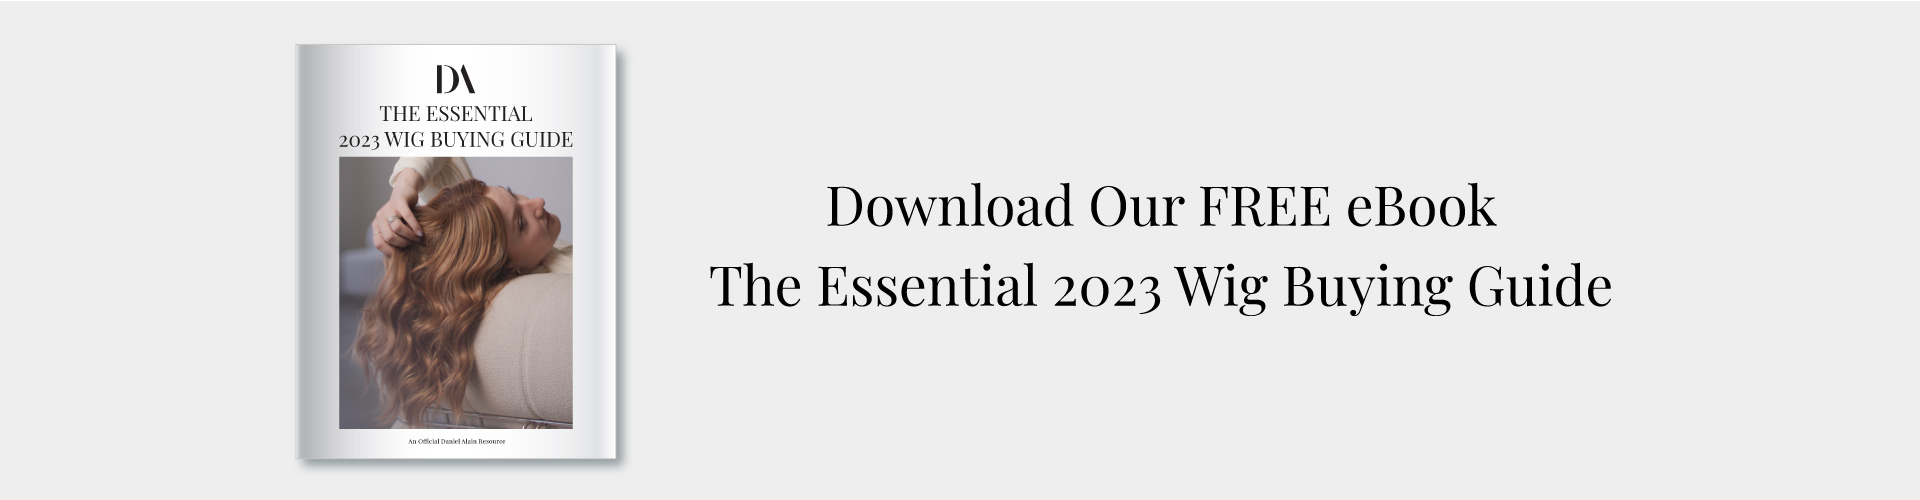 ebook-2023-wig-buying-guide-desktop-banner-1920px